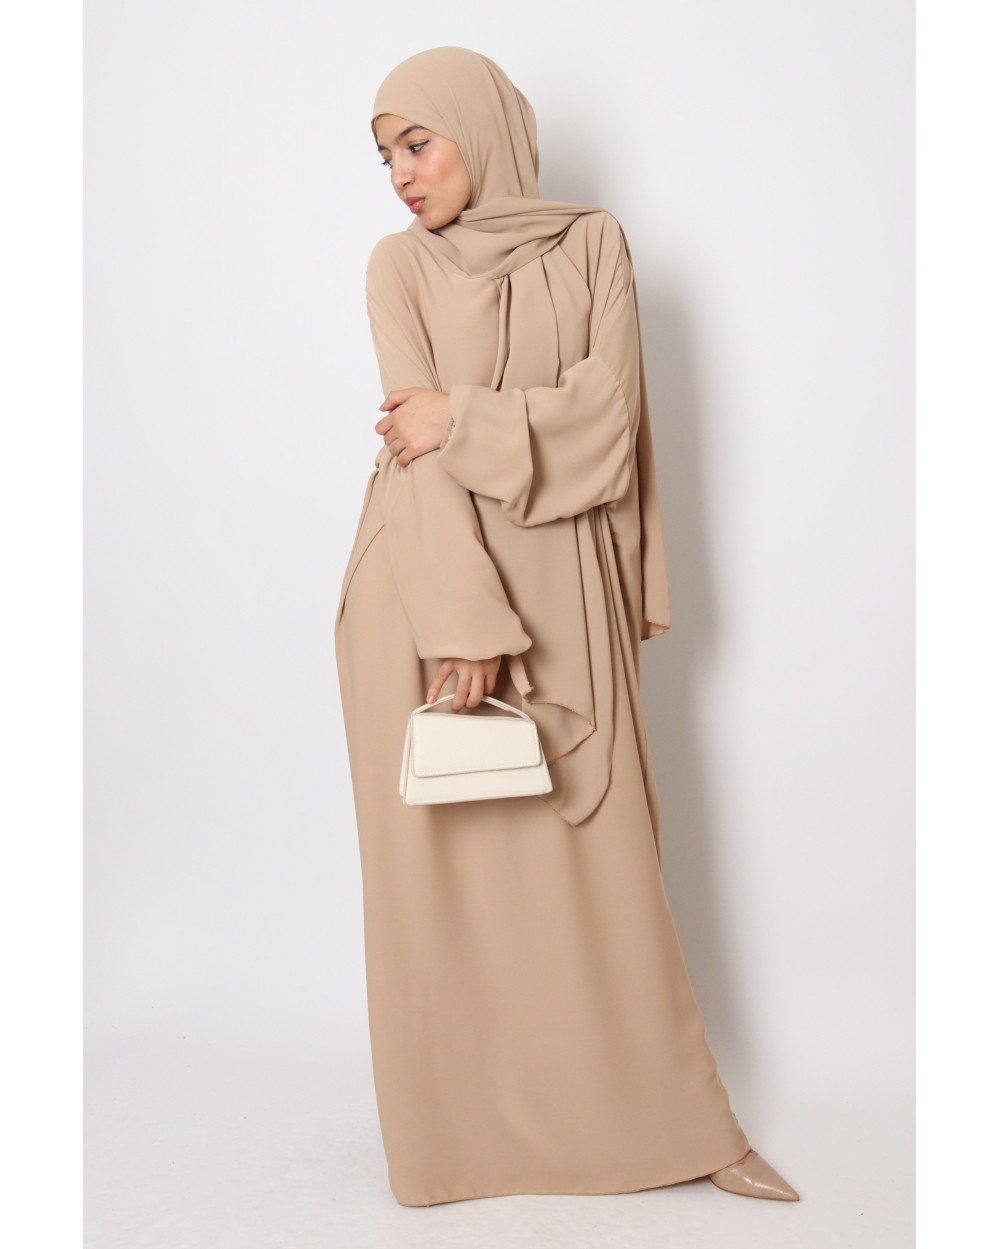 Robe hijab intégré